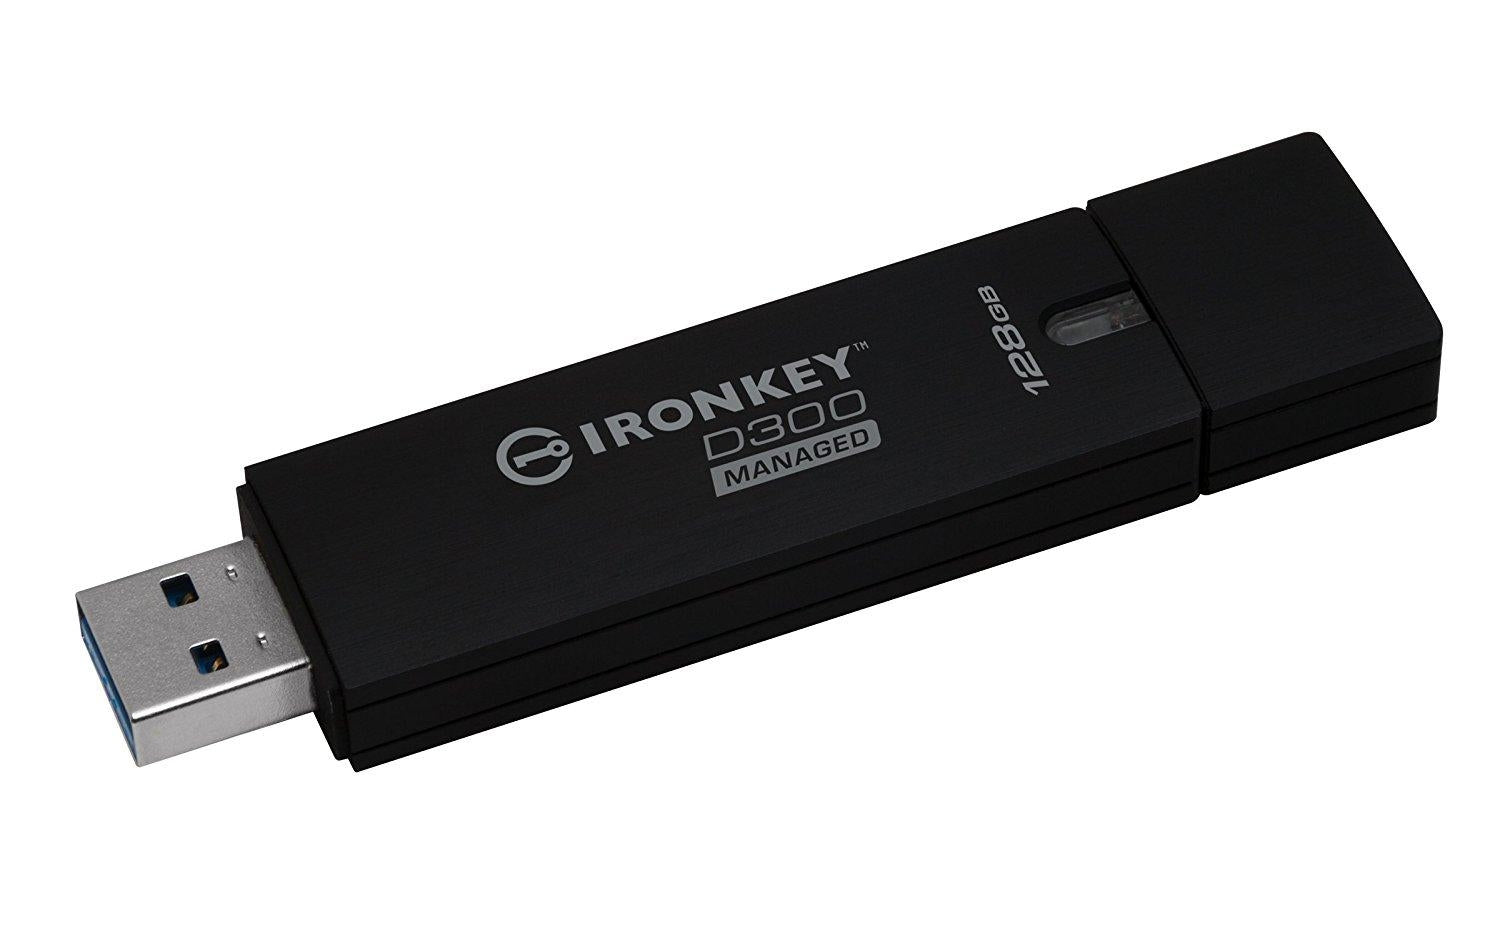 KINGSTON TECHNOLOGY IronKeyTM D300 Manaded USB Flash drive,128GB:250MB/s read,85MB/s write (IKD300M/128GB) - V&L Canada